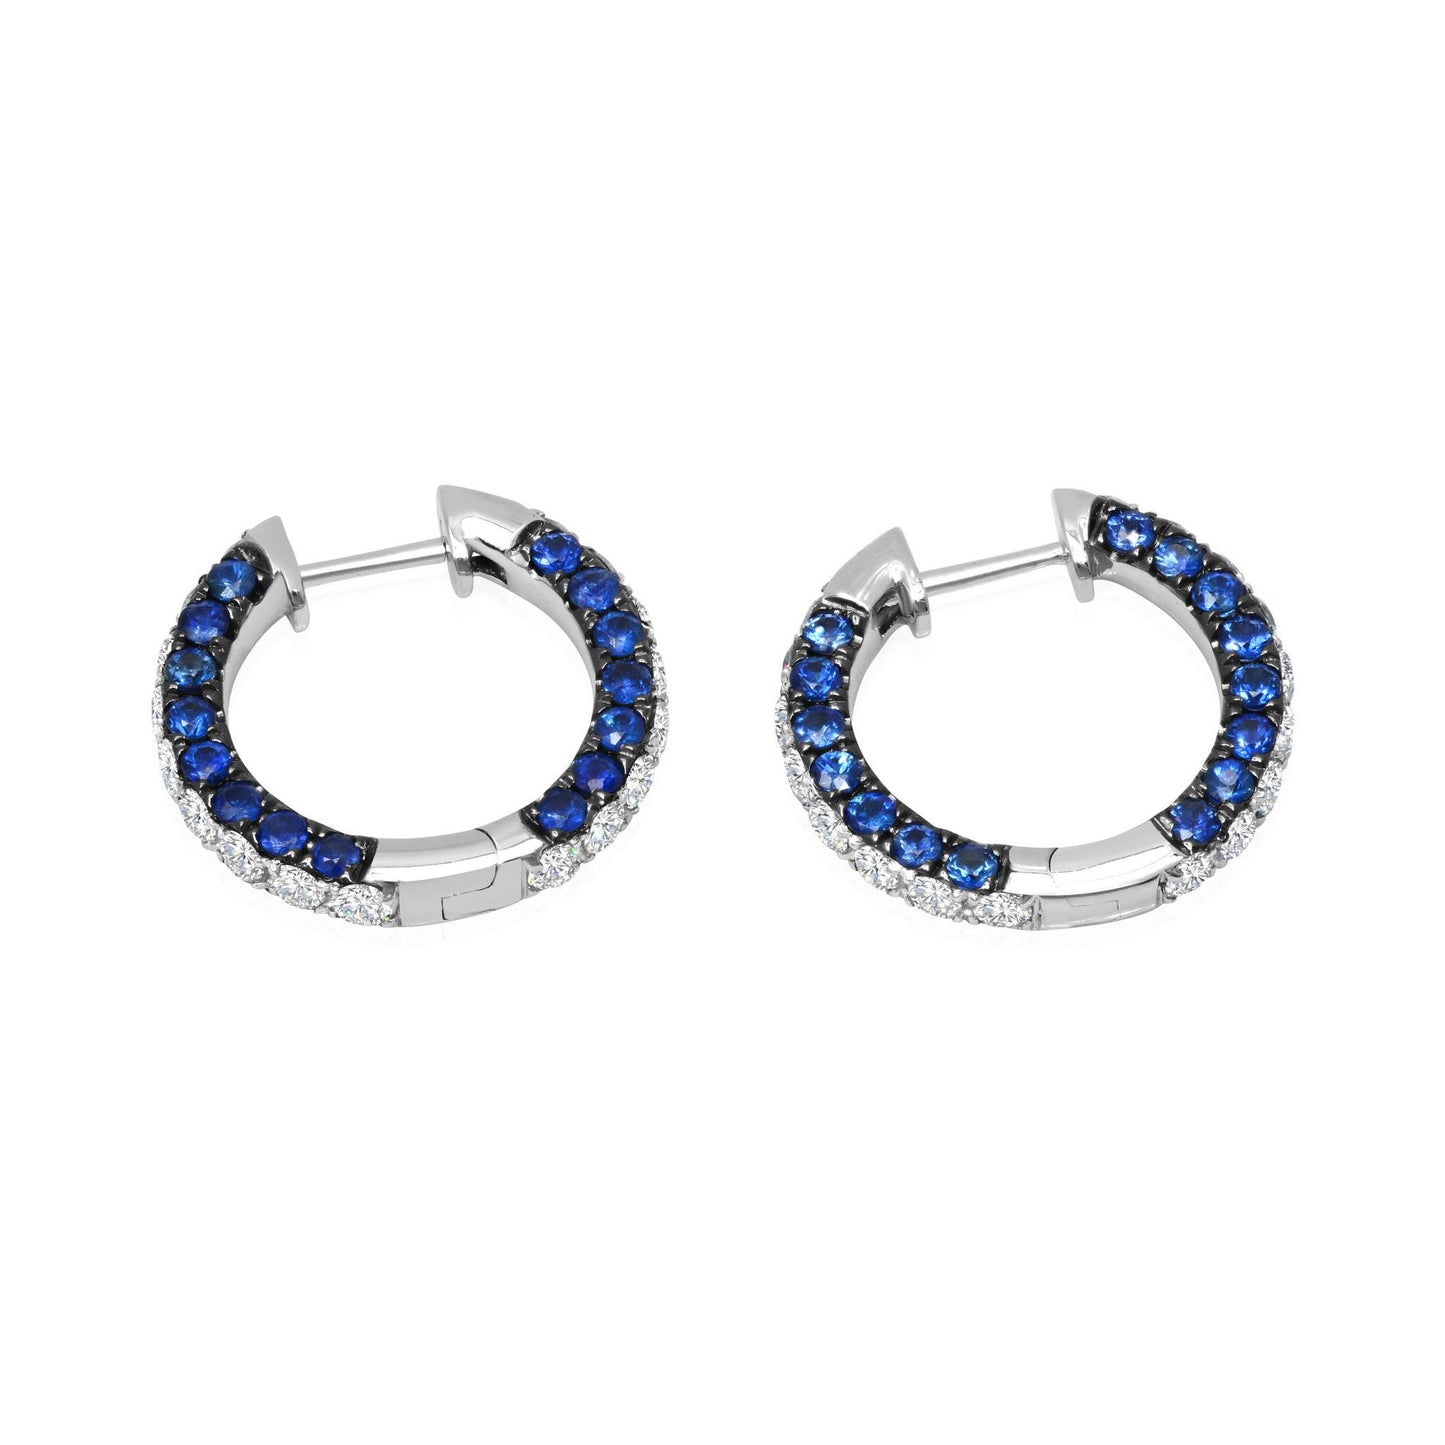 3 Sided Blue Sapphire and Diamond Hoop Earrings